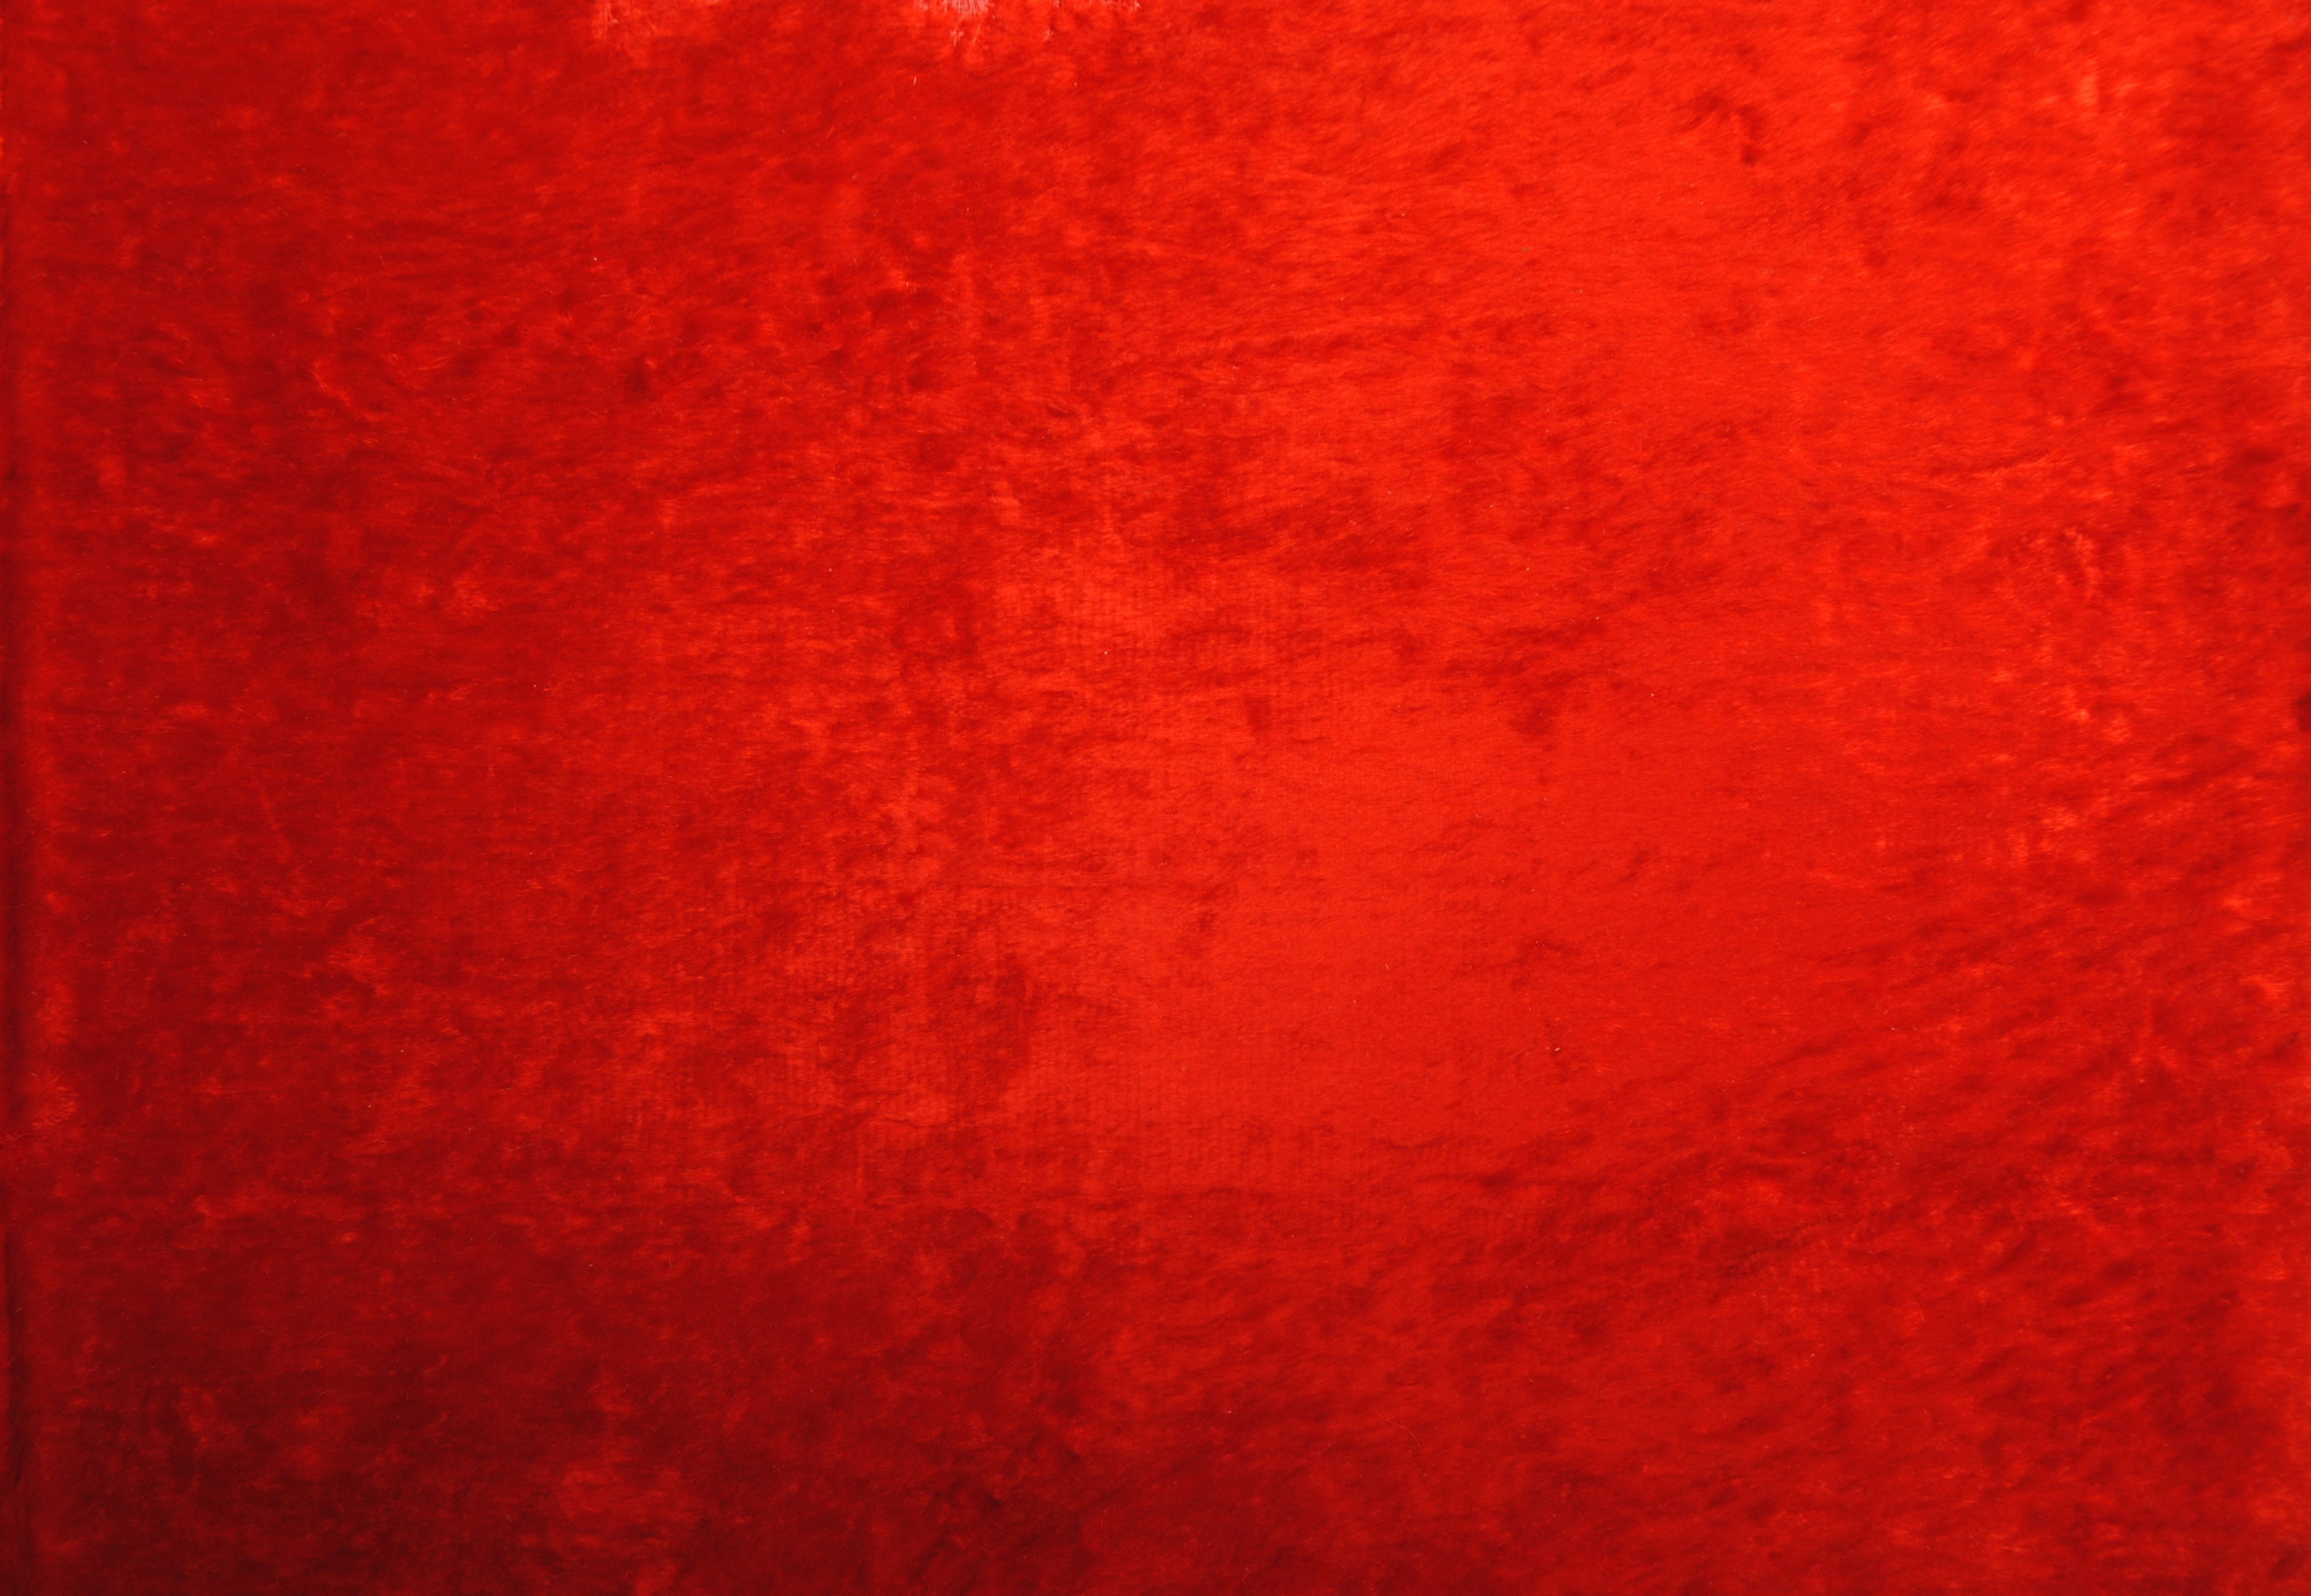 Download Texture Red Velvet Wallpaper 3712x2564 Full HD Wallpapers